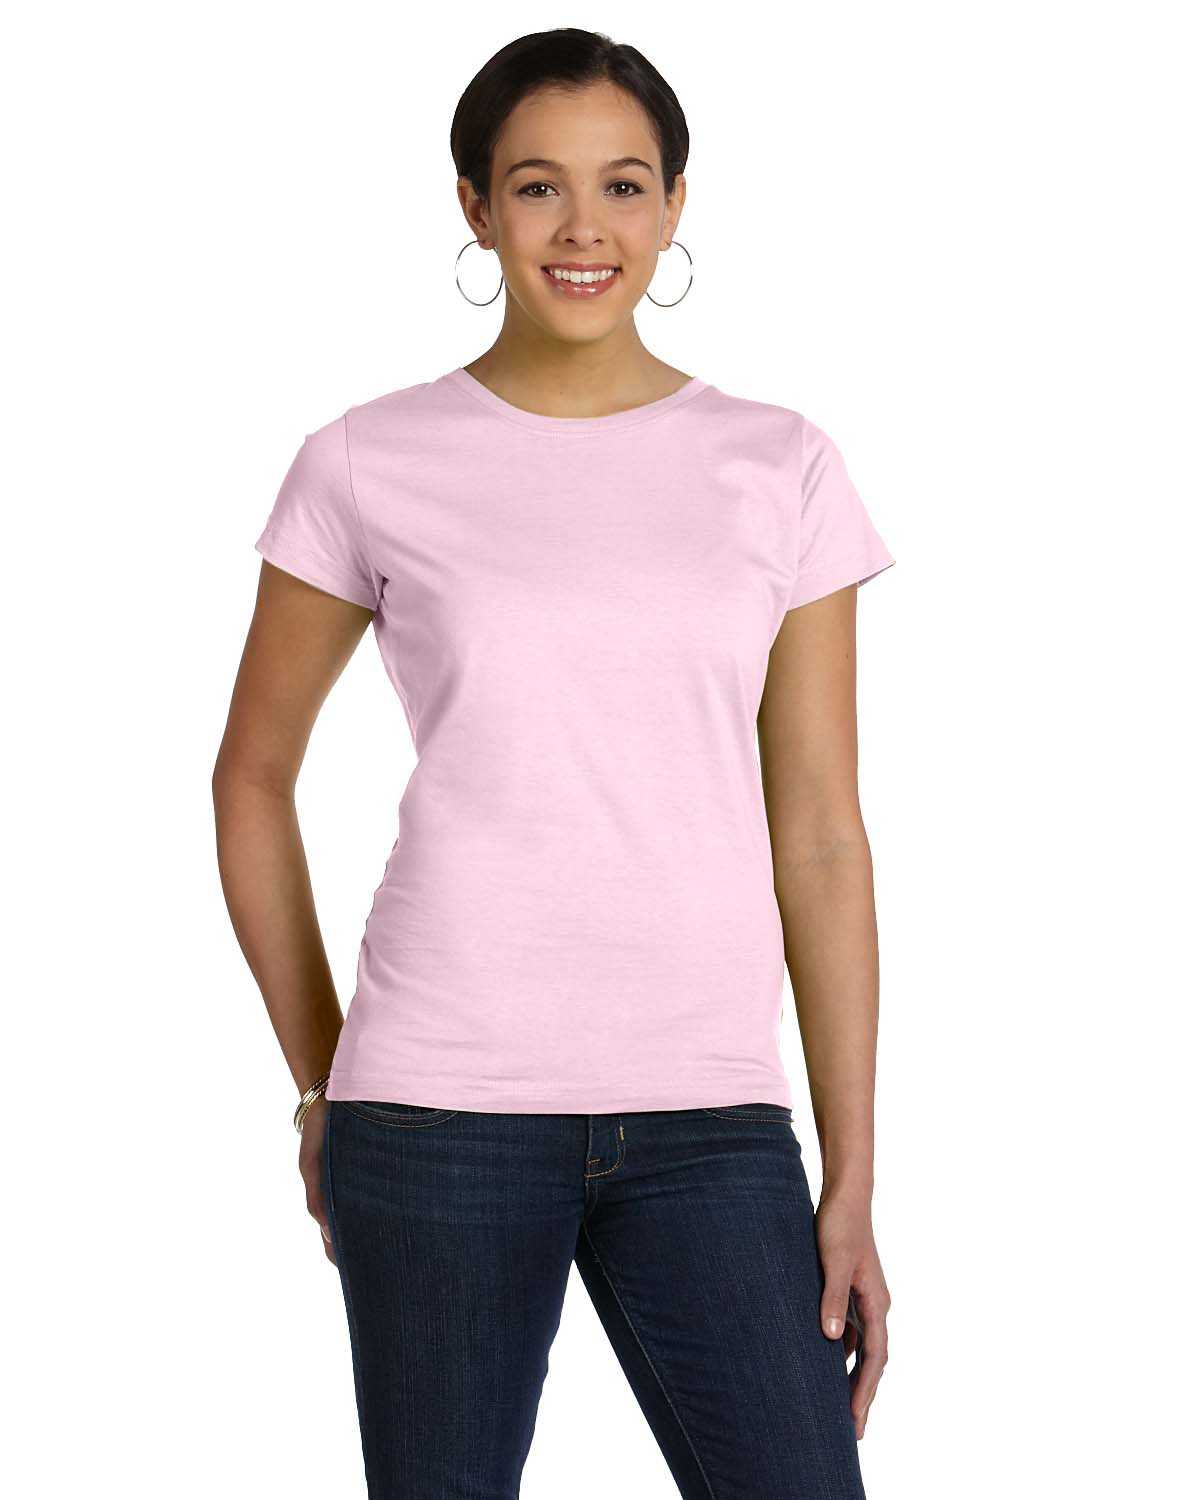 LAT 3516 Ladies' Fine Jersey T-Shirt | ApparelChoice.com